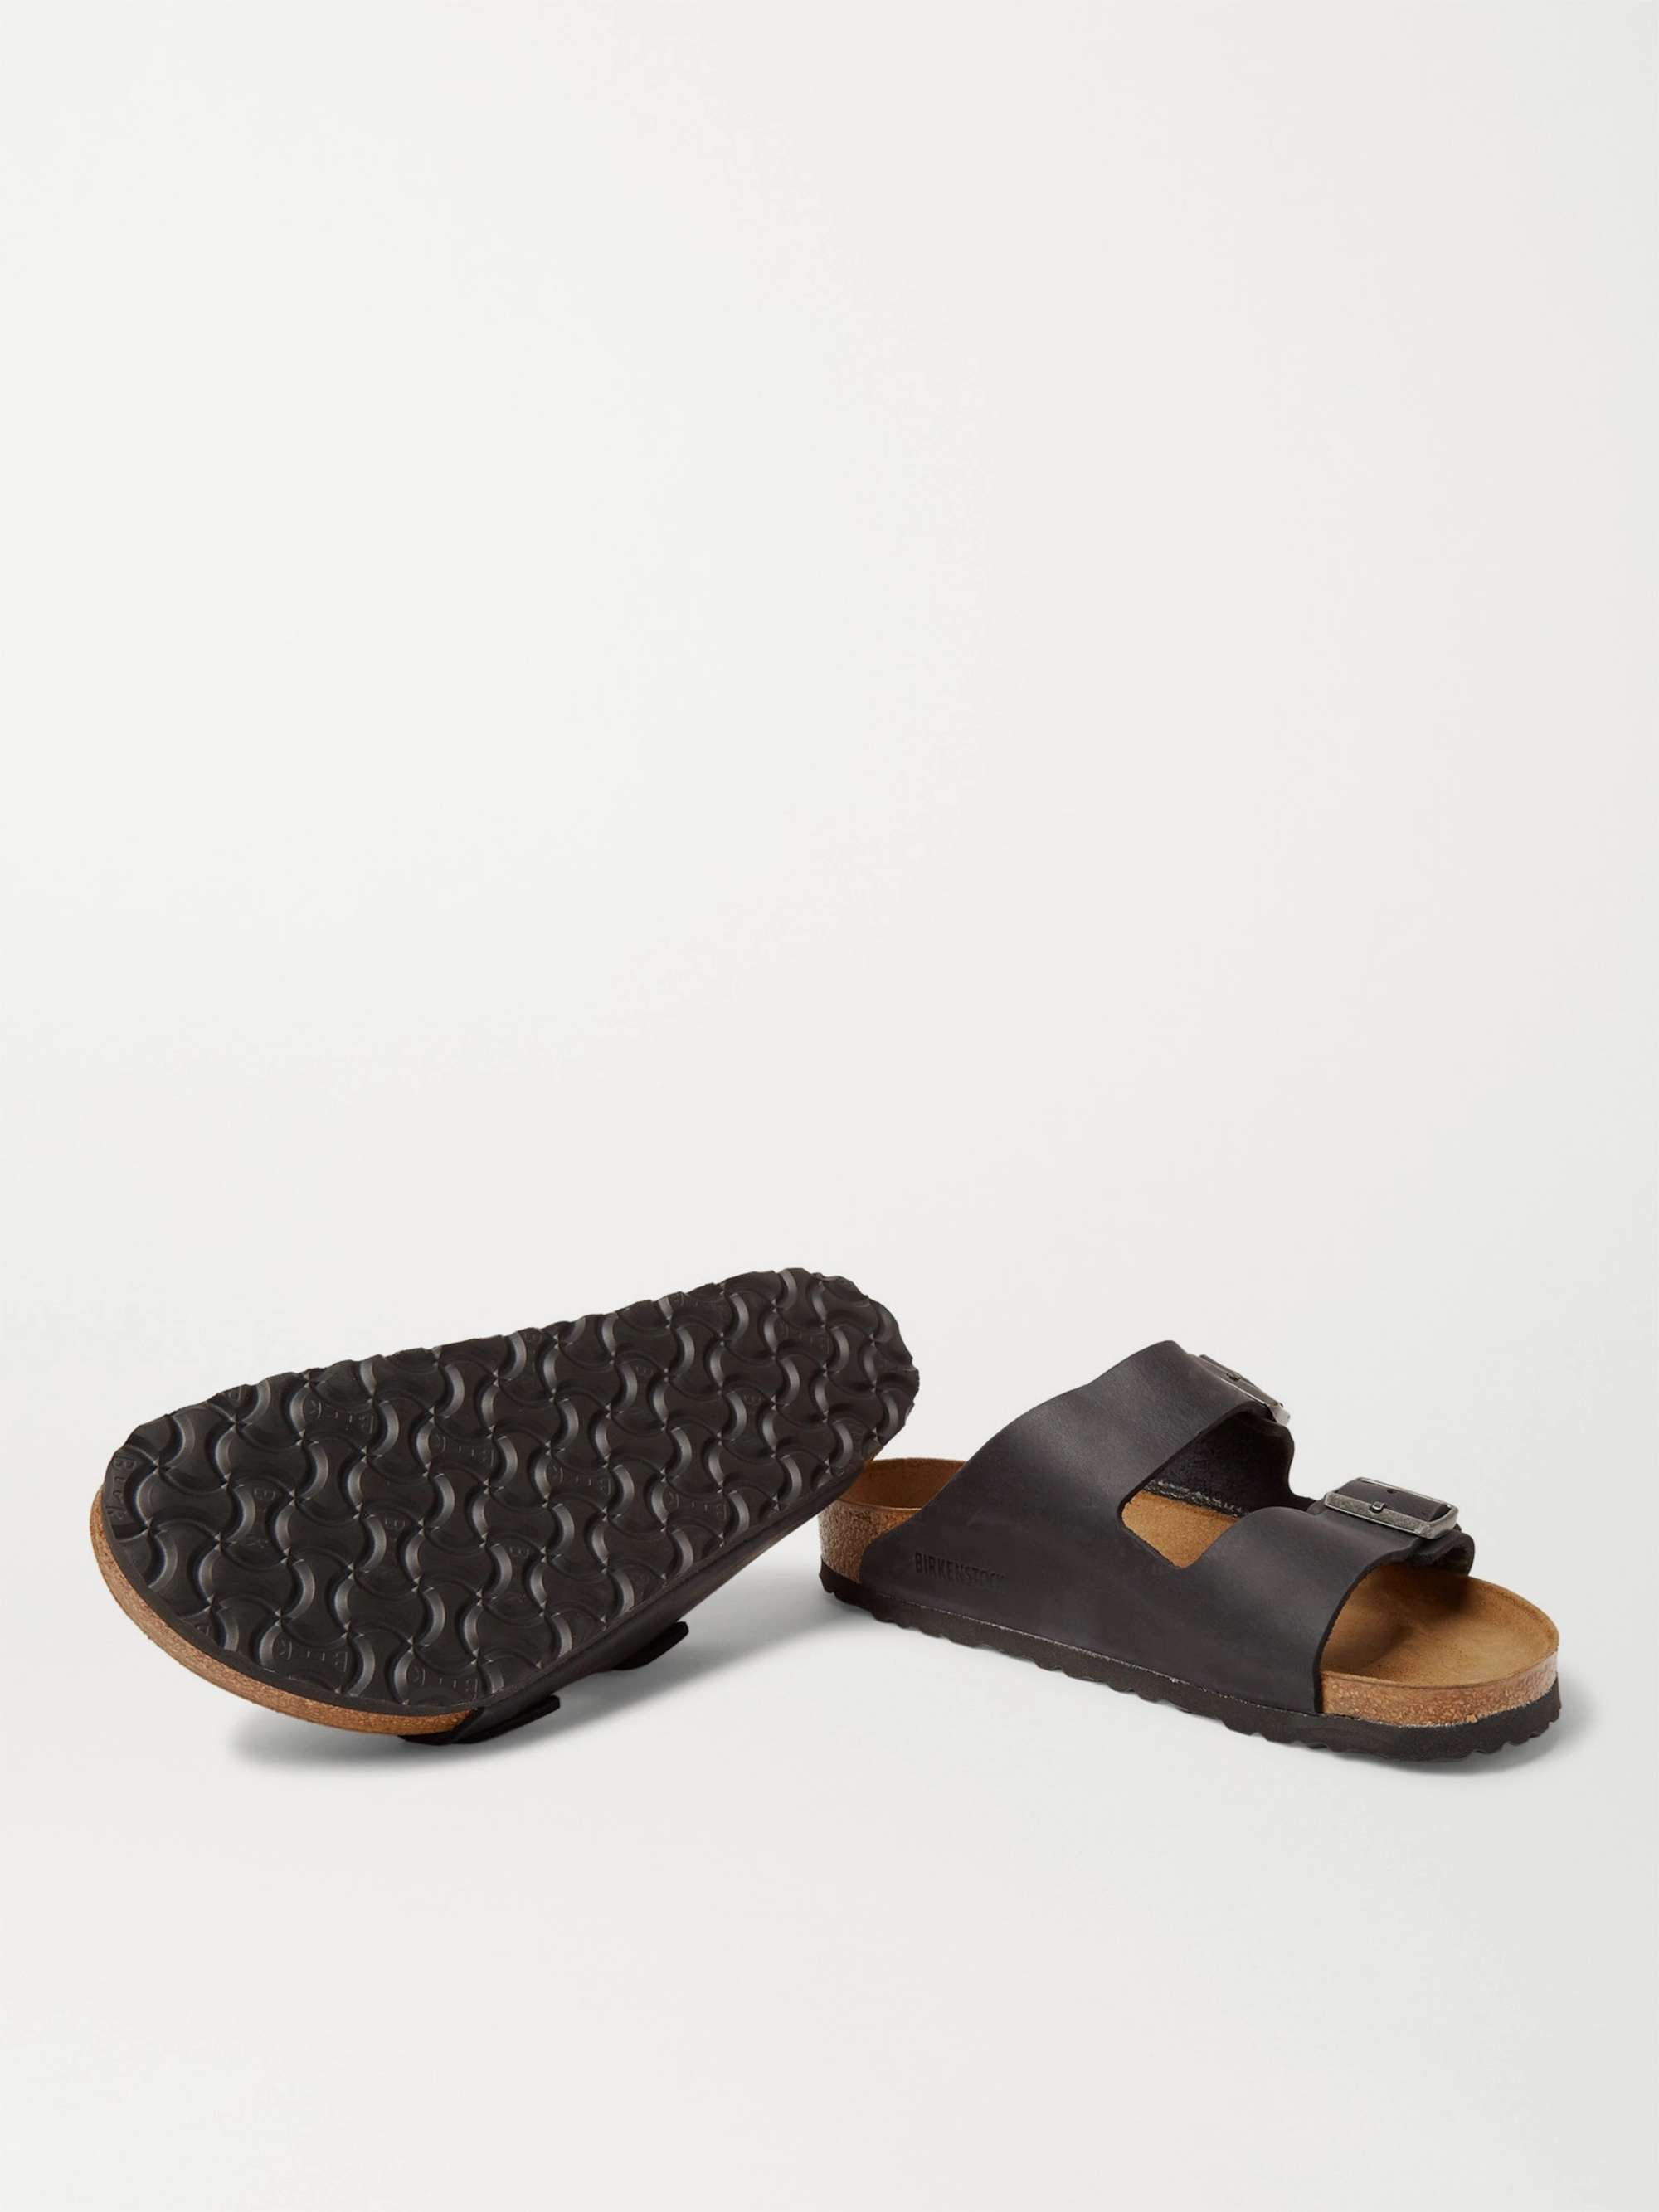 BIRKENSTOCK Arizona Oiled-Leather Sandals